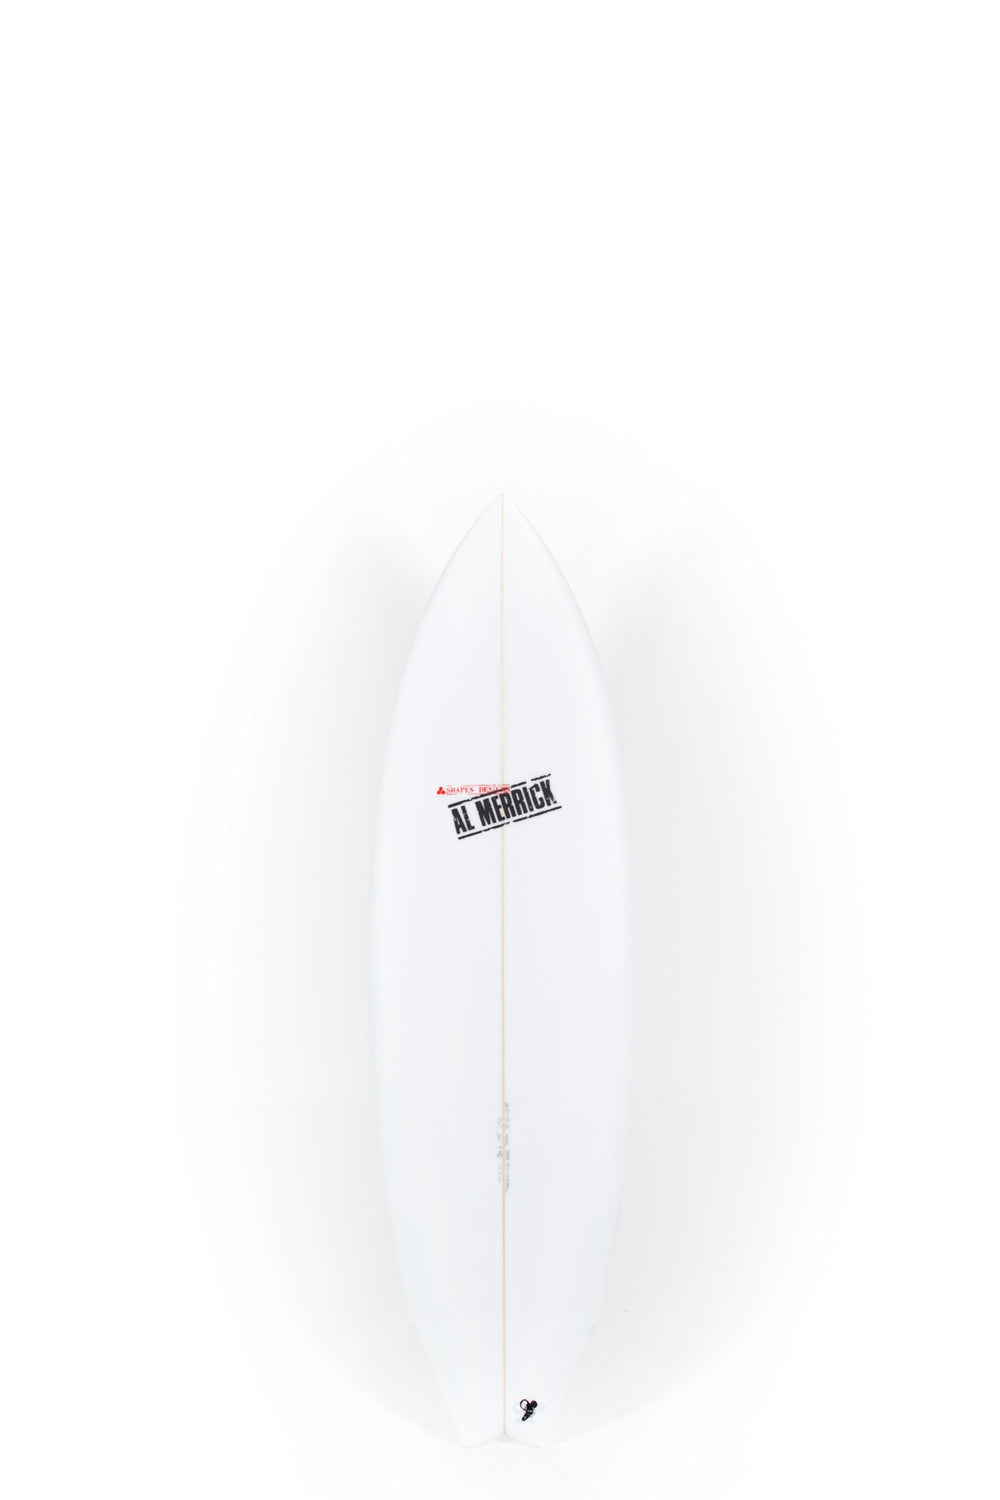 Pukas Surf Shop - Channel Islands - FREE SCRUBBER by Britt Merrick - 5'10